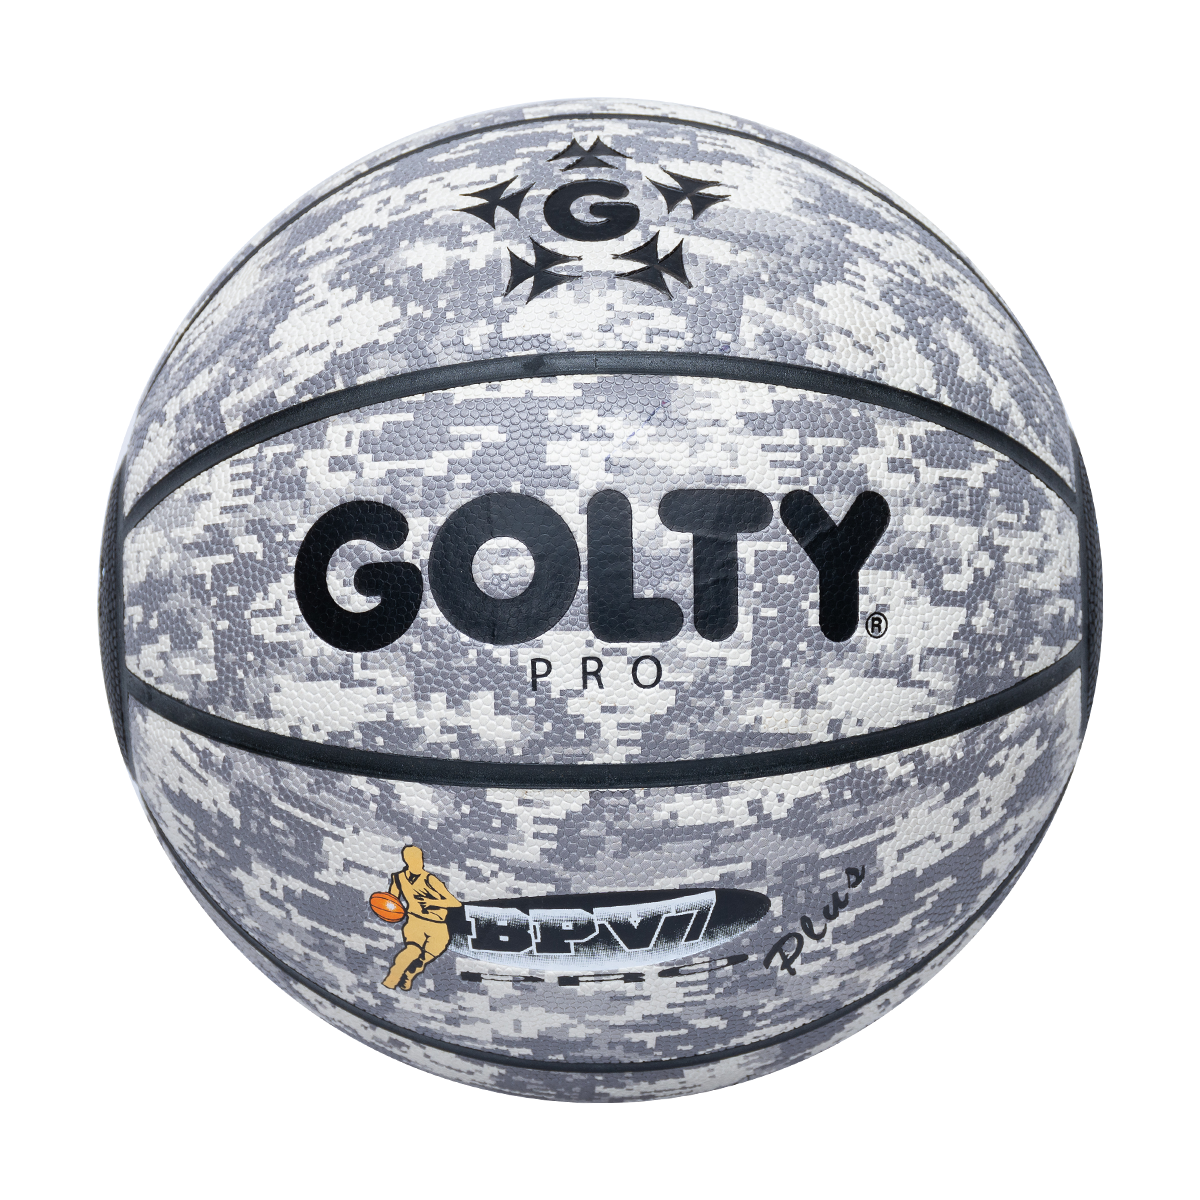 Balon de Baloncesto GOLTY Pro Plus III # 7 